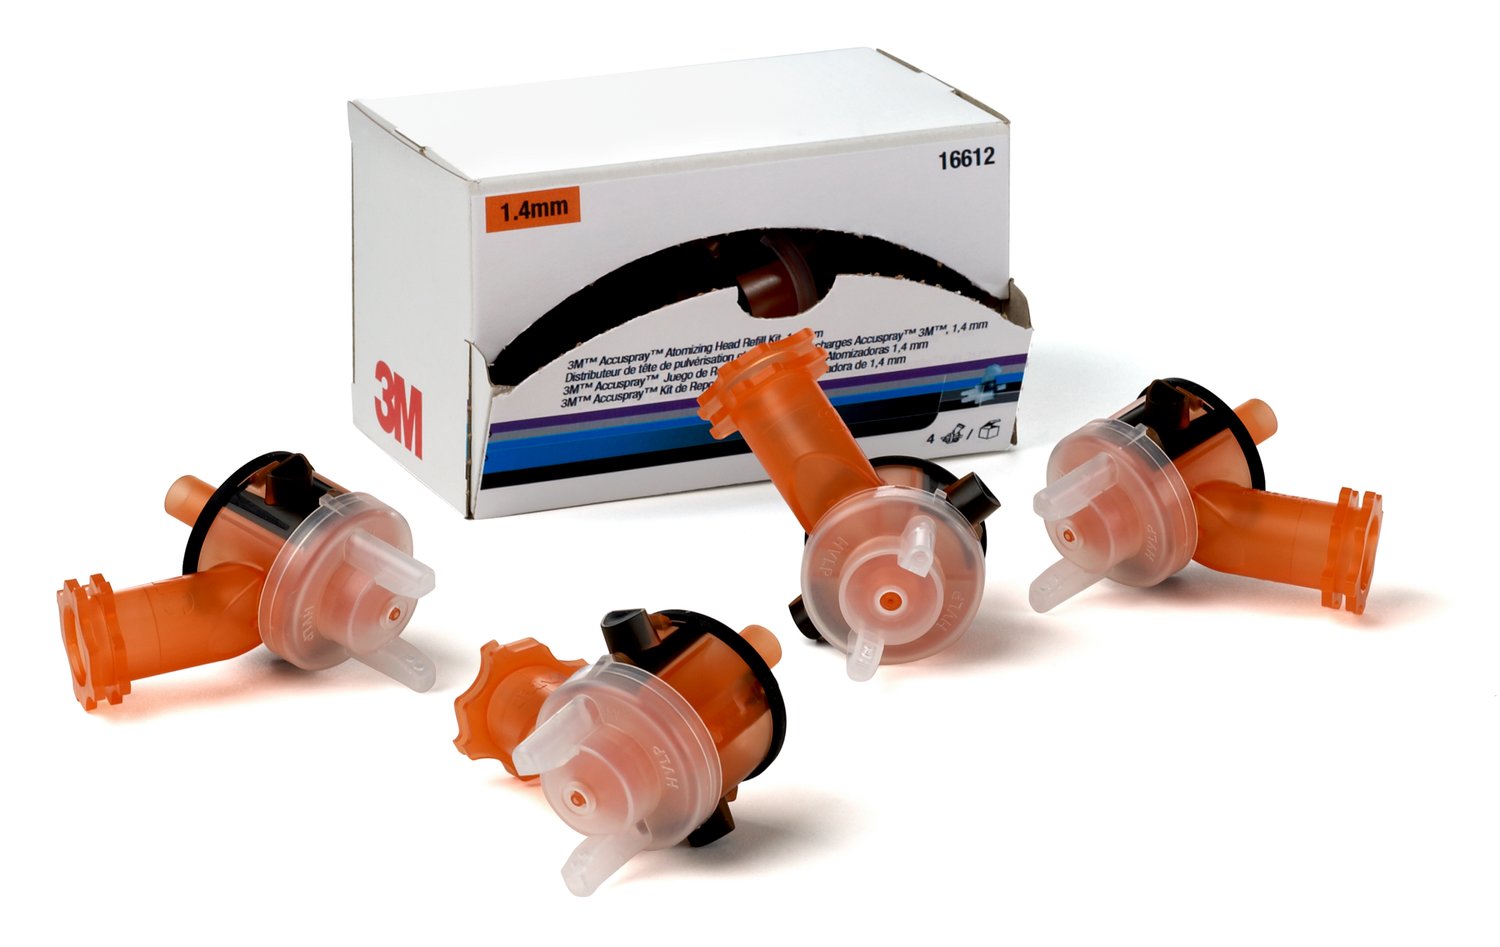 7100017731 - 3M Accuspray Atomizing Head, 16612, Orange, 1.4 mm, 4 per kit, 6 kits
per case